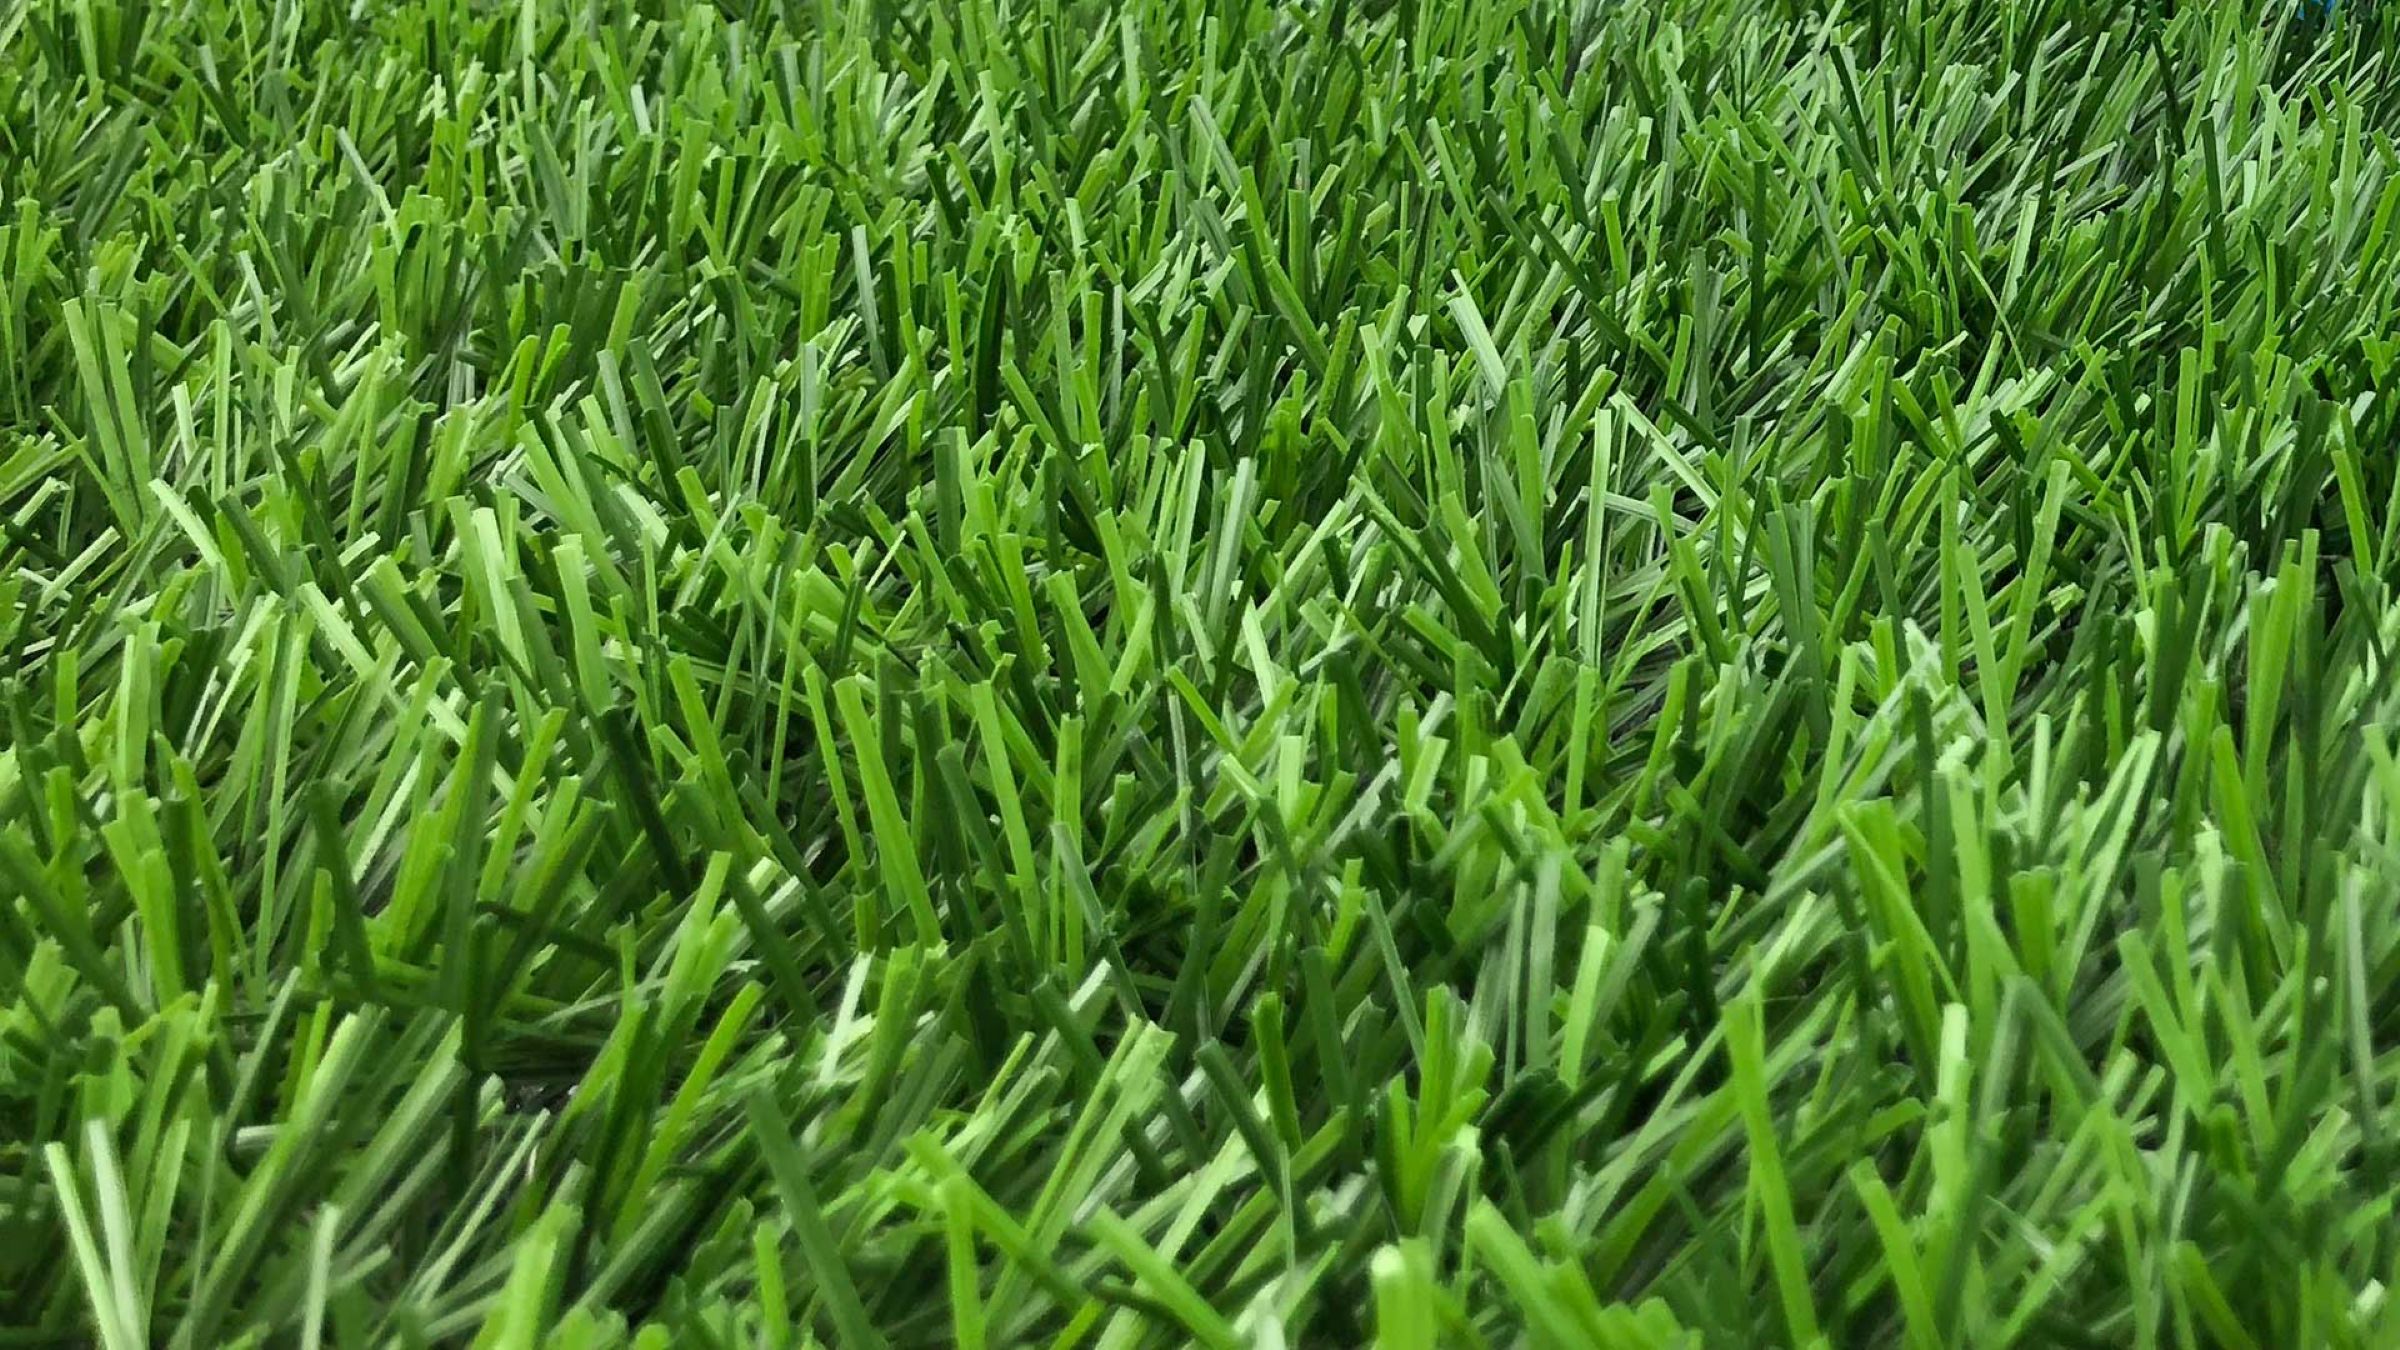 hybridgrass-0